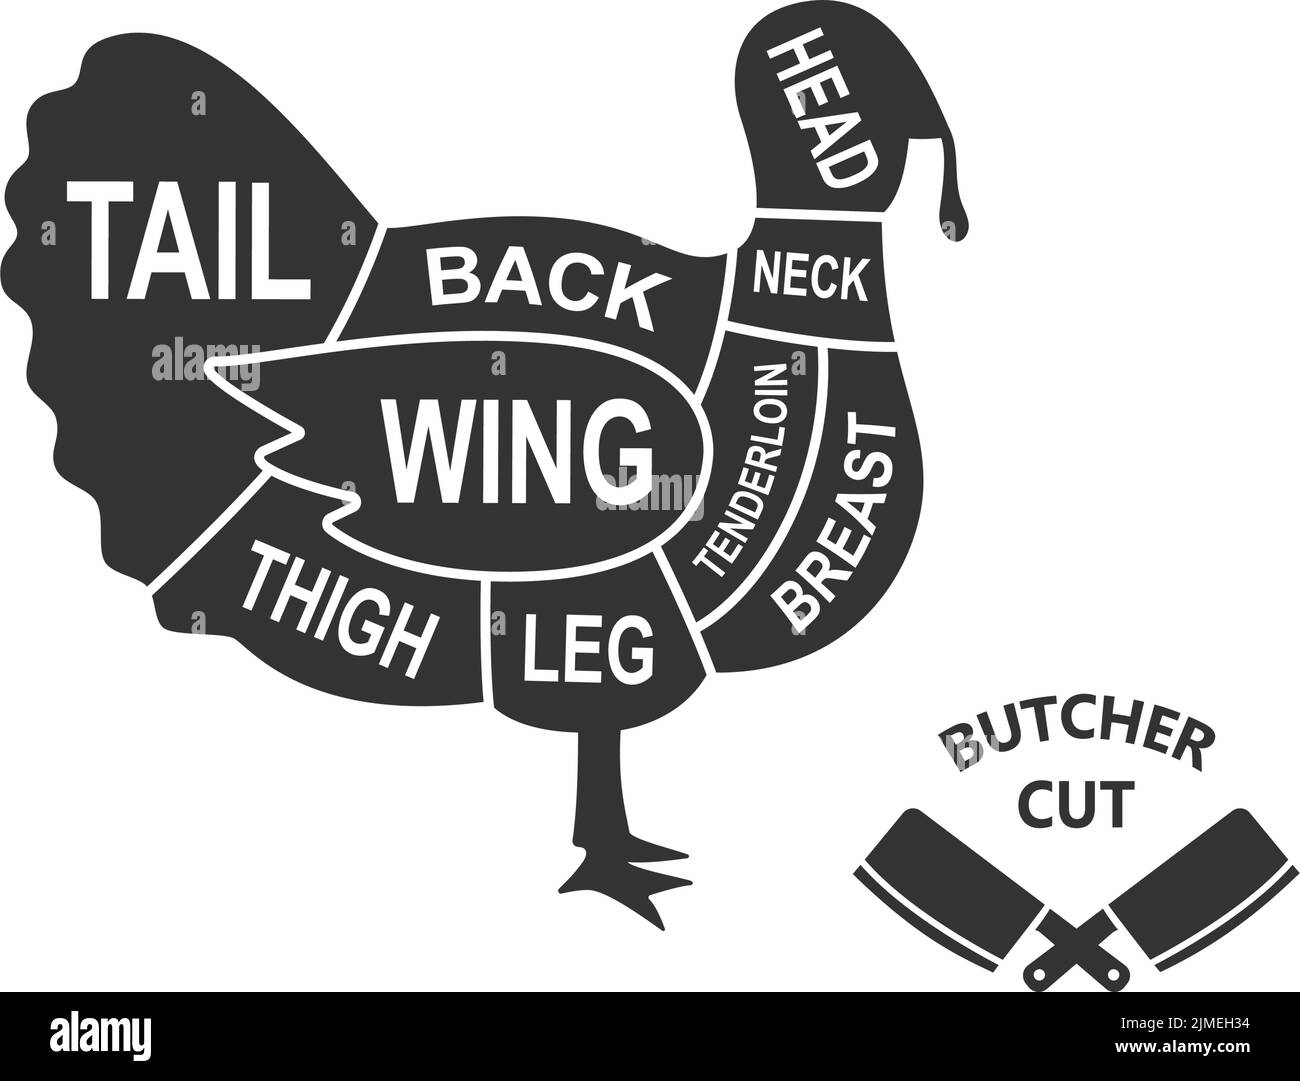 Turkey scheme cuts. Butcher diagram poster. Meat diagram scheme illustration. Cuts of turkey meat. Farm animal silhouette. Stock Vector